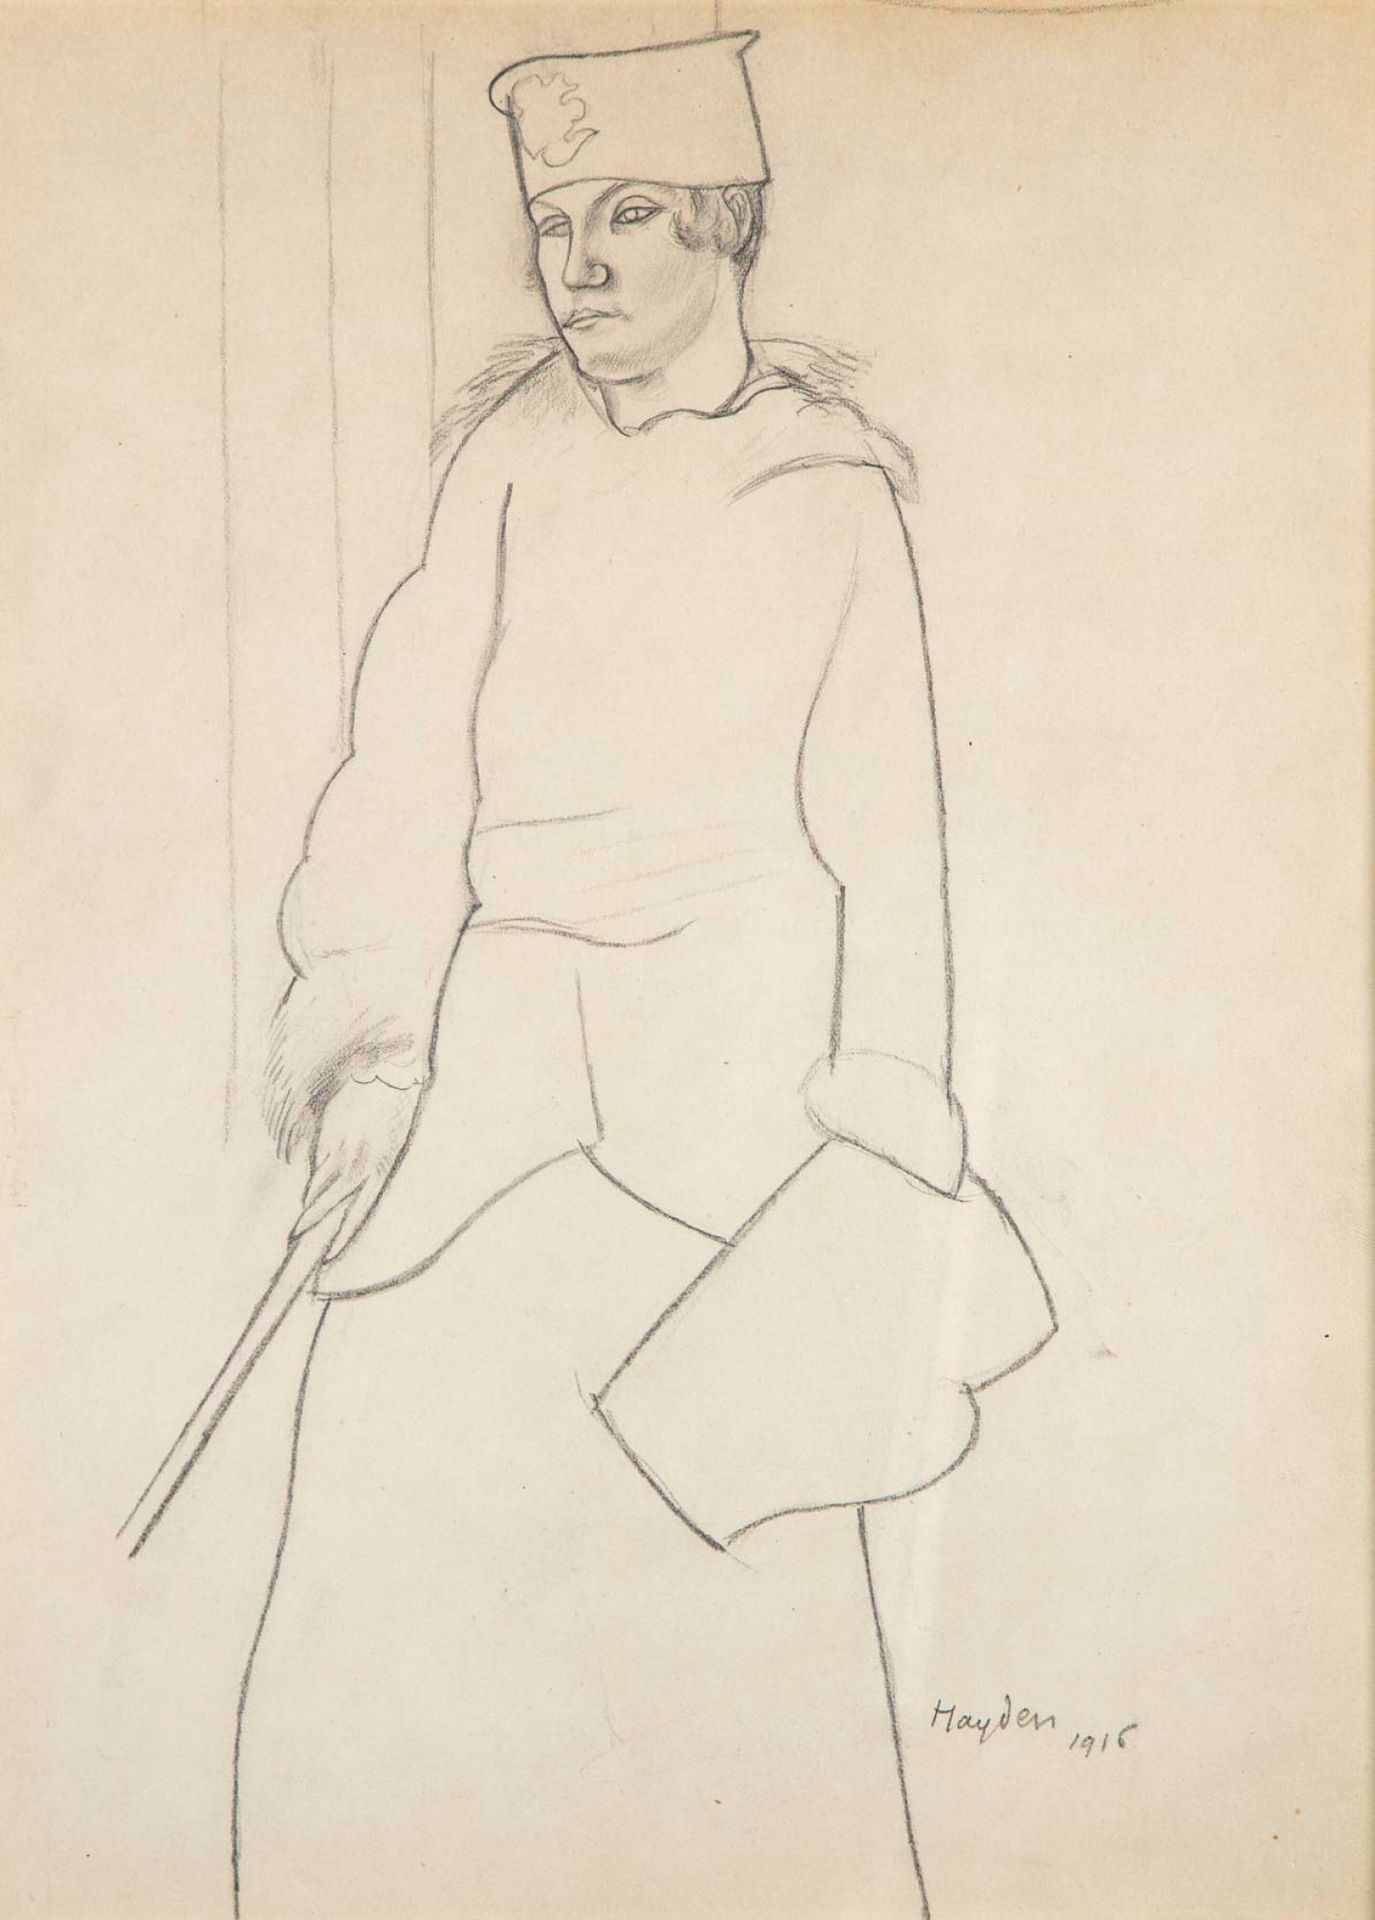 Henri HAYDEN Henri HAYDEN (1883-1970)

Woman with a muff

Pencil on paper.

Sign&hellip;